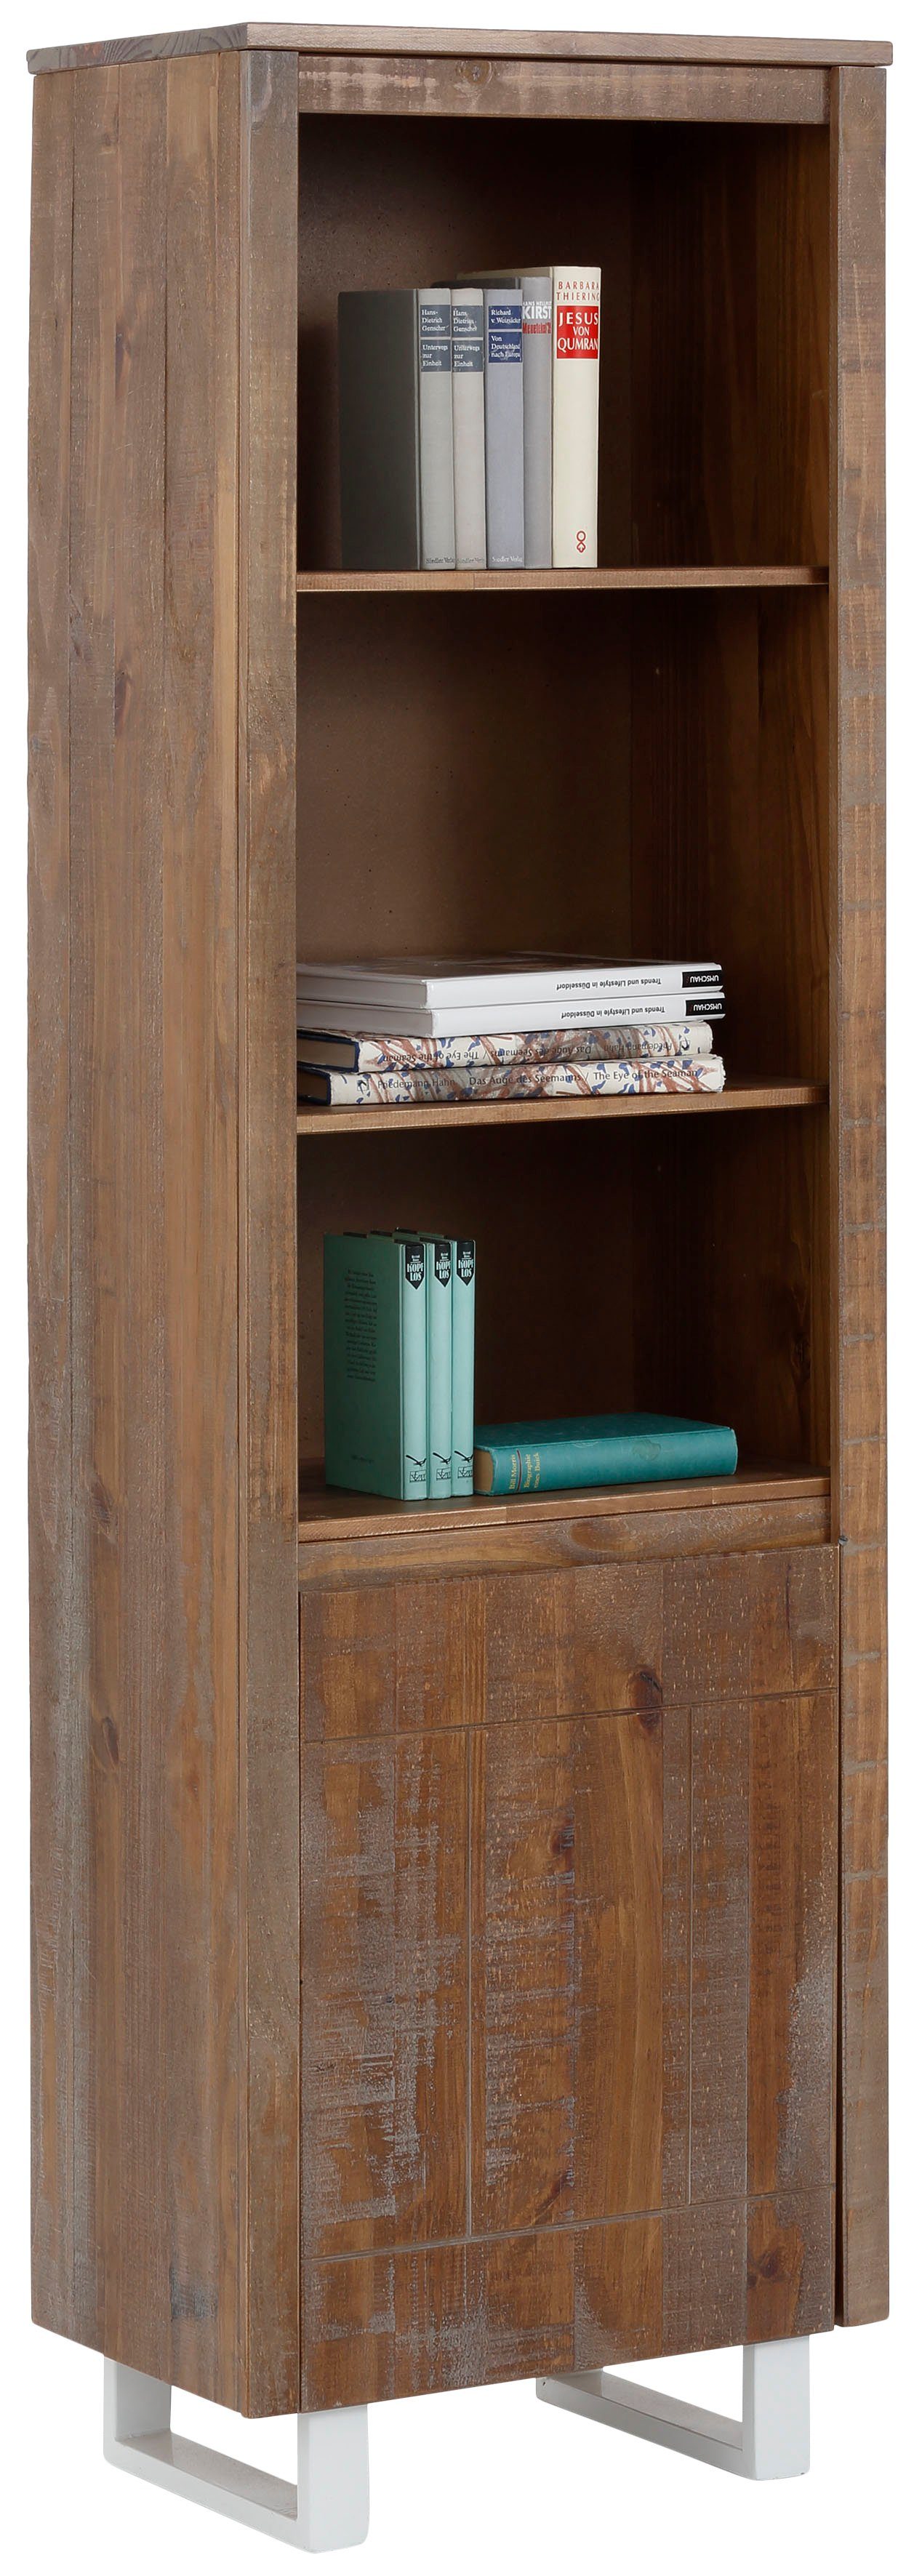 Home affaire Bücherregal Lagos, aus schönem massivem Kiefernholz, grifflos,  Breite 55 cm, Tolle Holzoptik